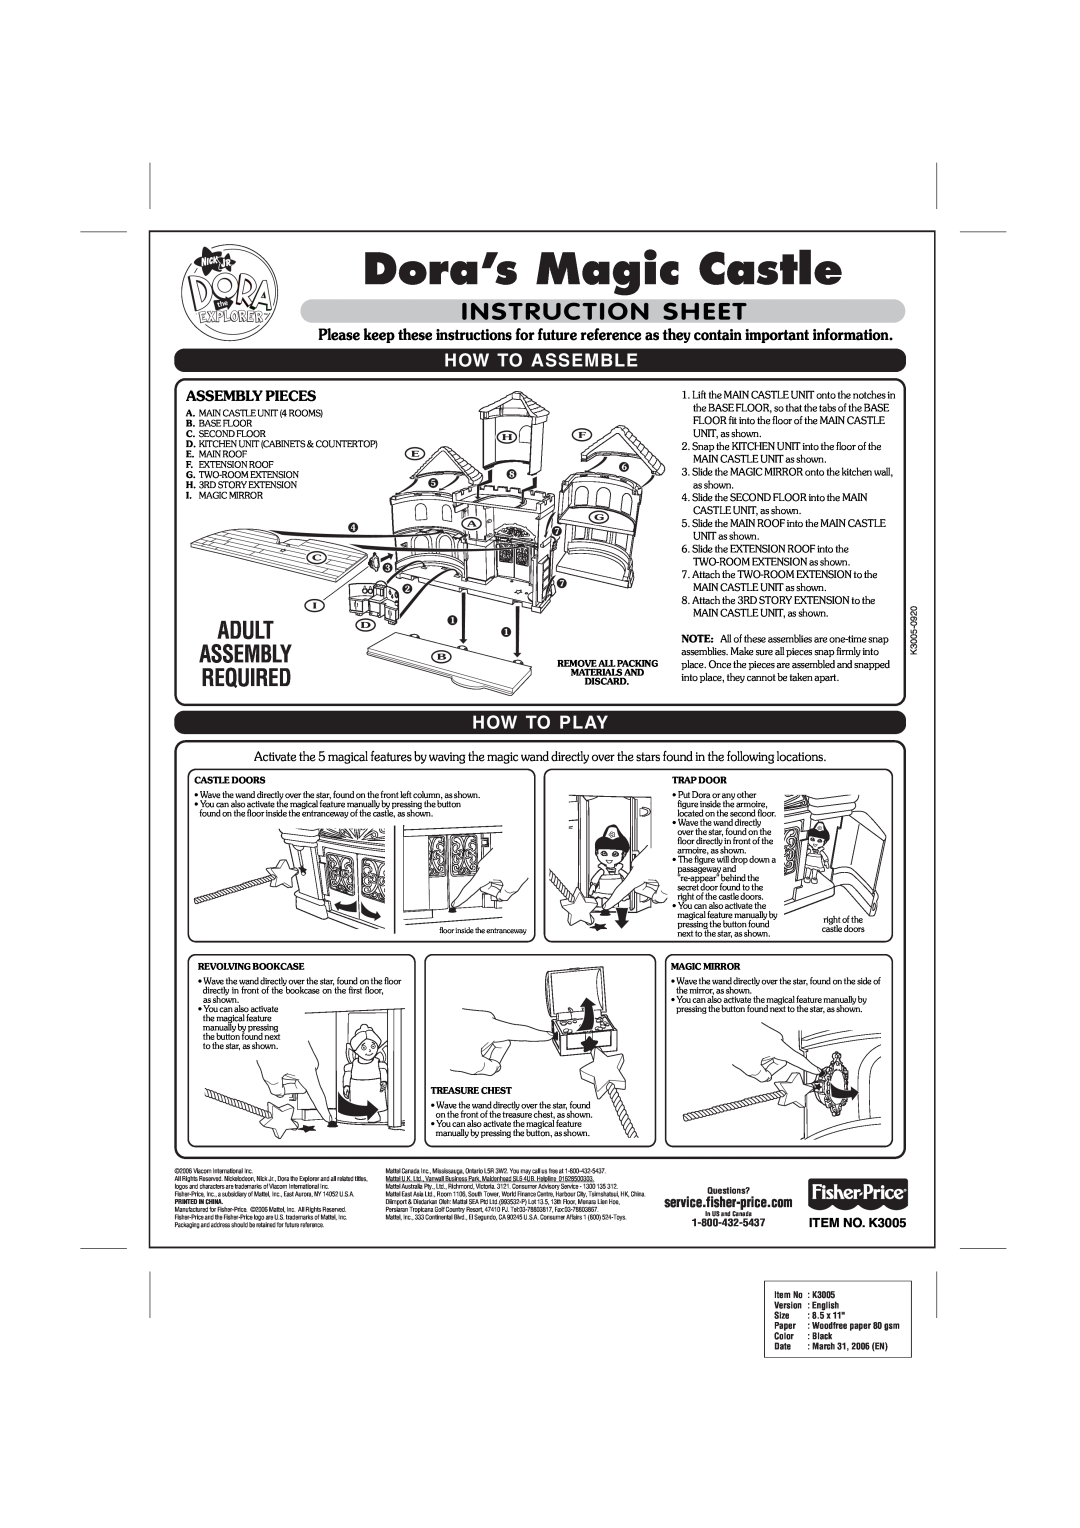 Fisher-Price K3005 instruction sheet Dora’s Magic Castle, Instruction Sheet, How To Assemble, How To Play, Adult, Assembly 